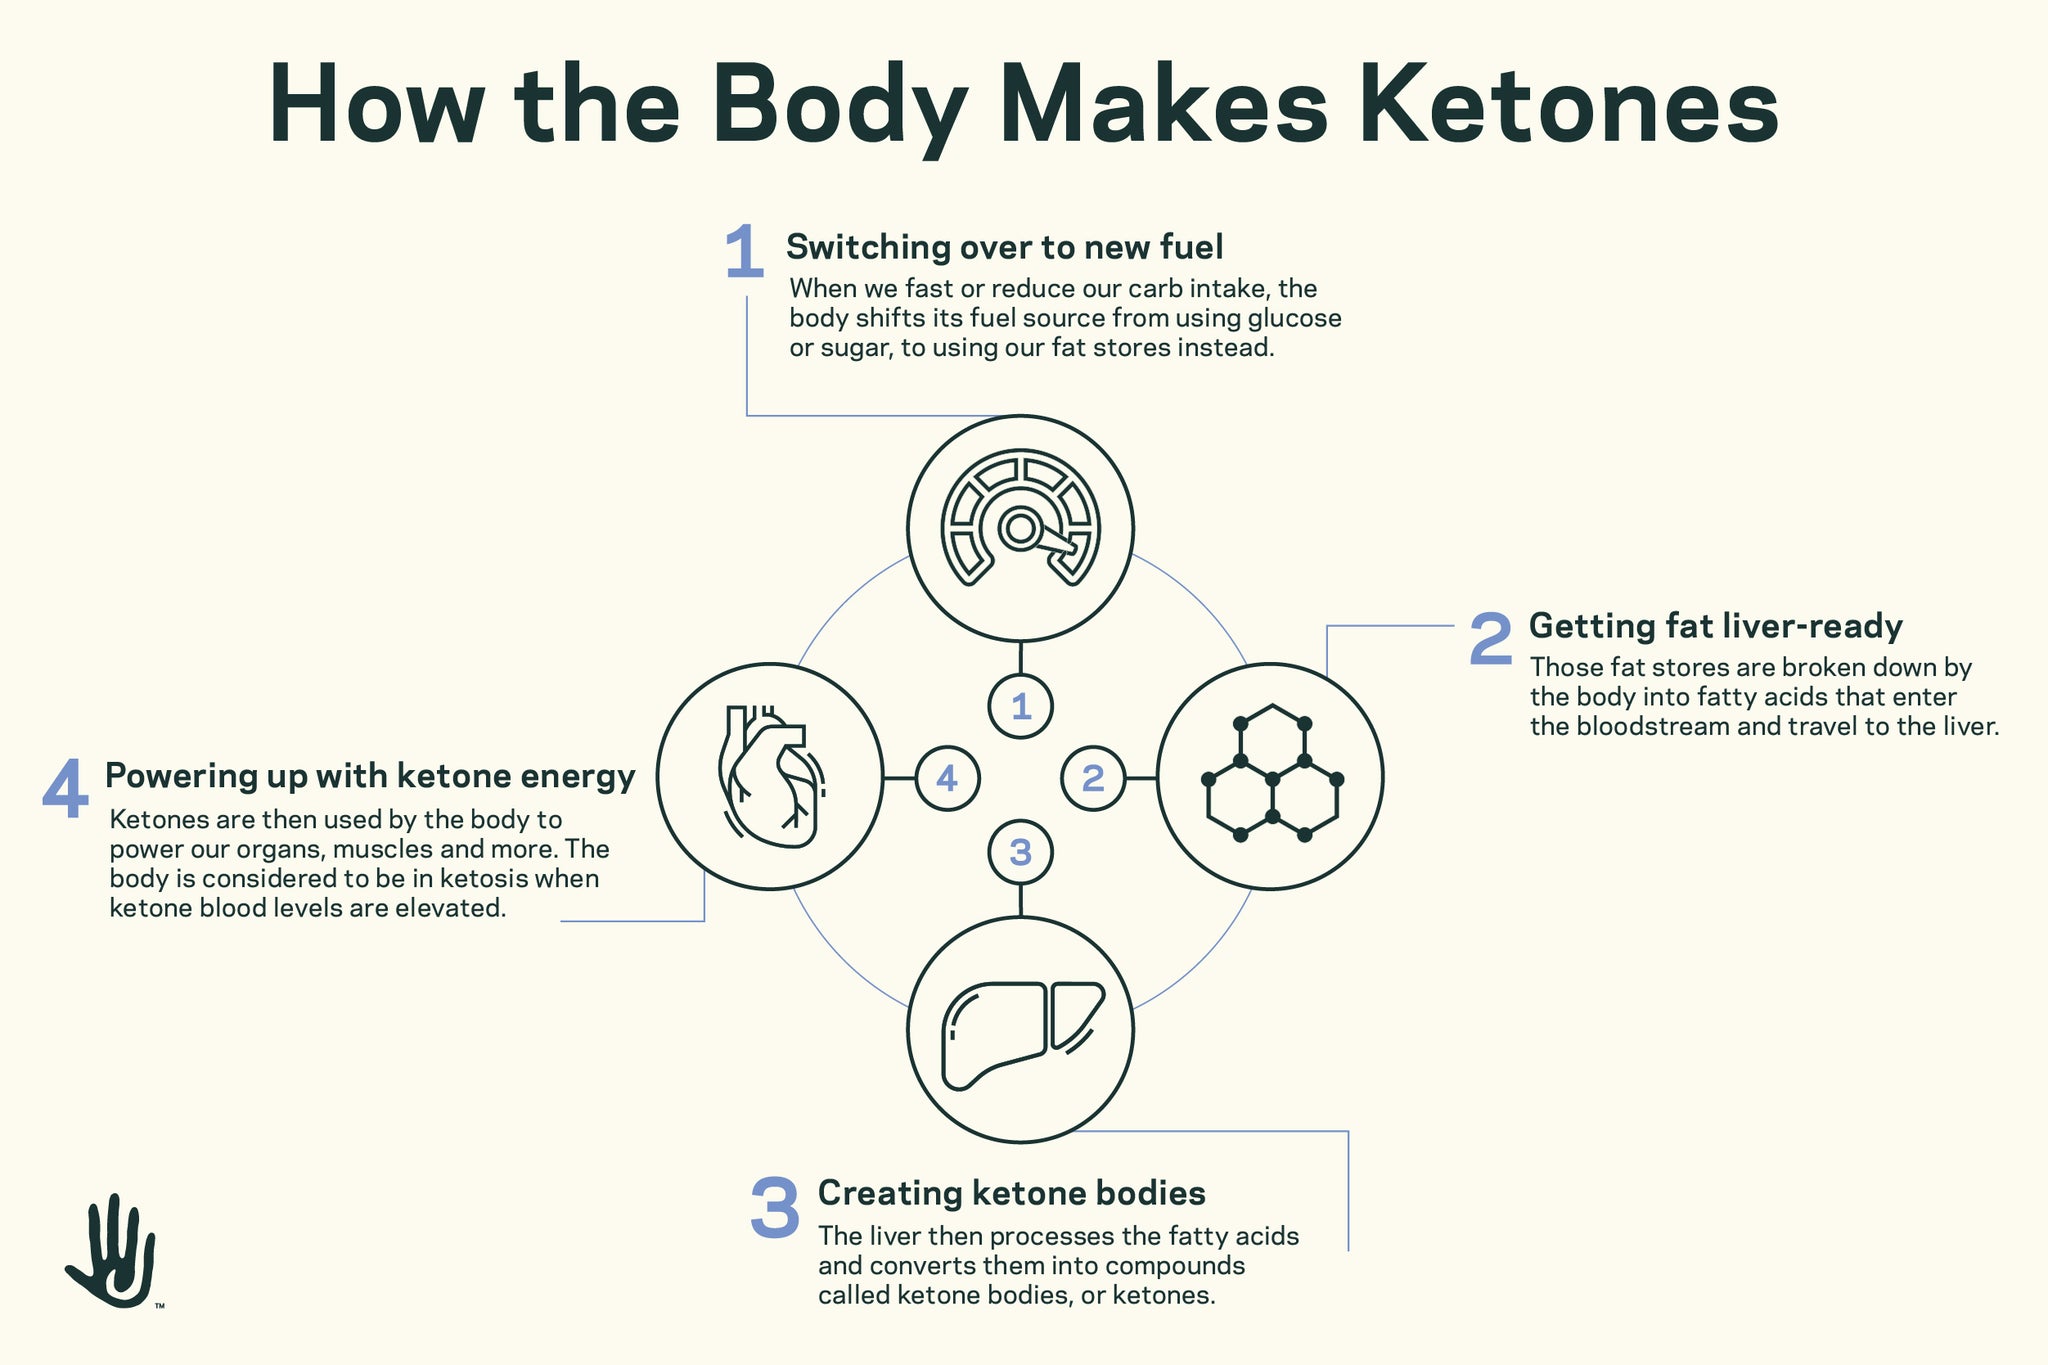 How the body makes ketones